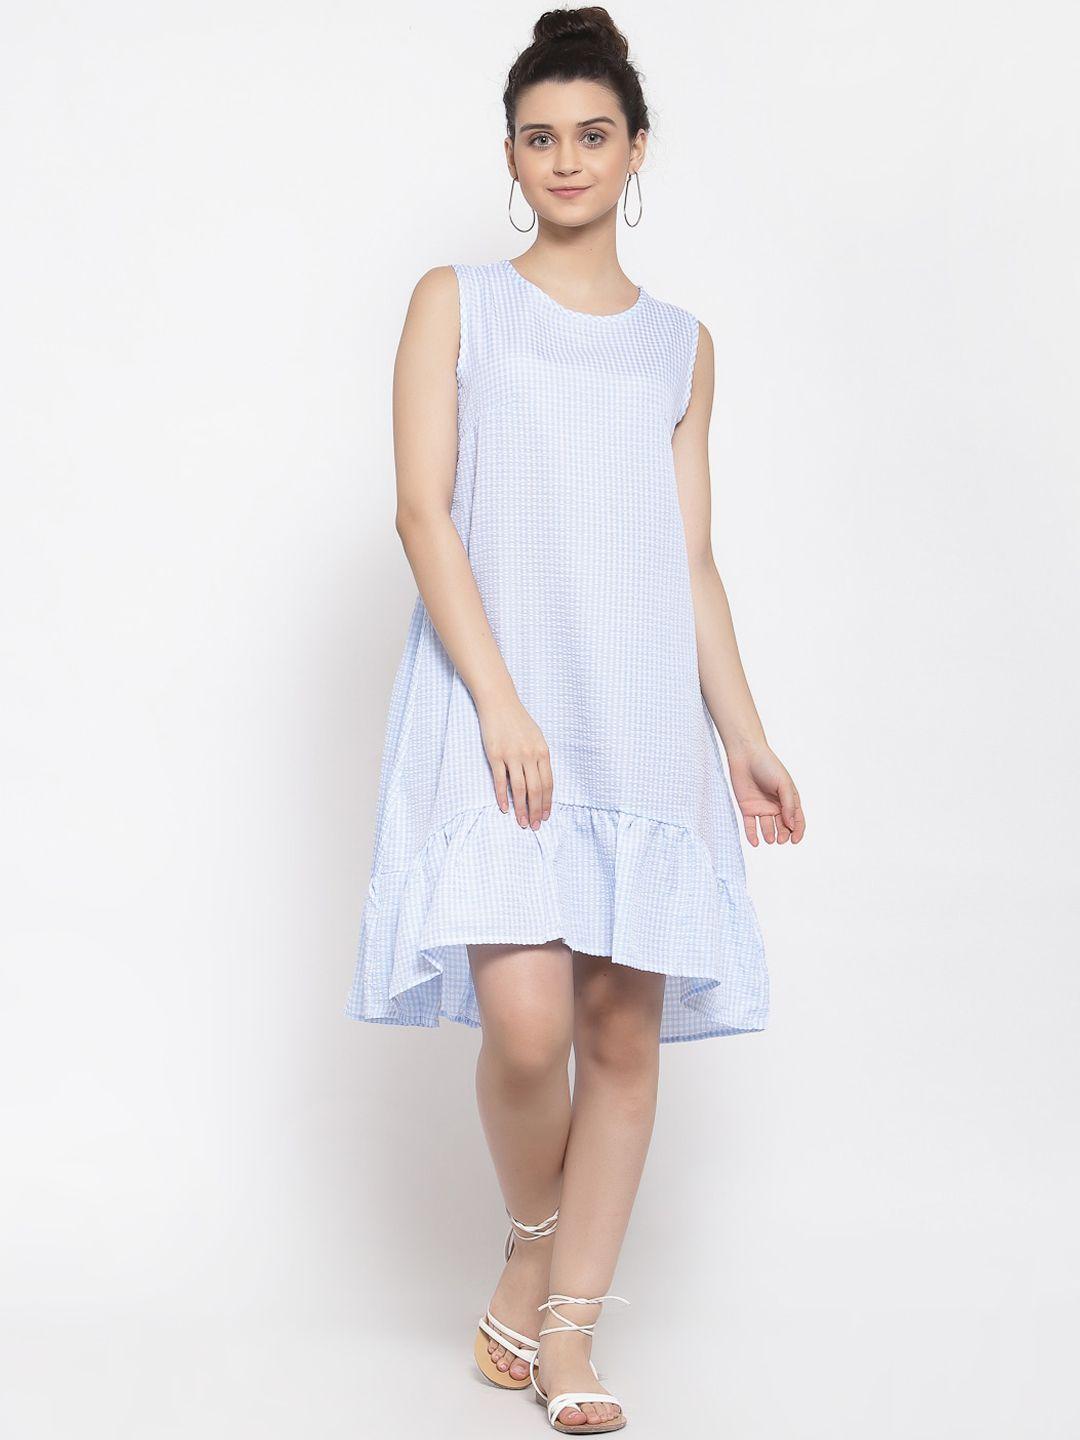 iki chic turquoise blue & white checked sleeveless drop-waist dress